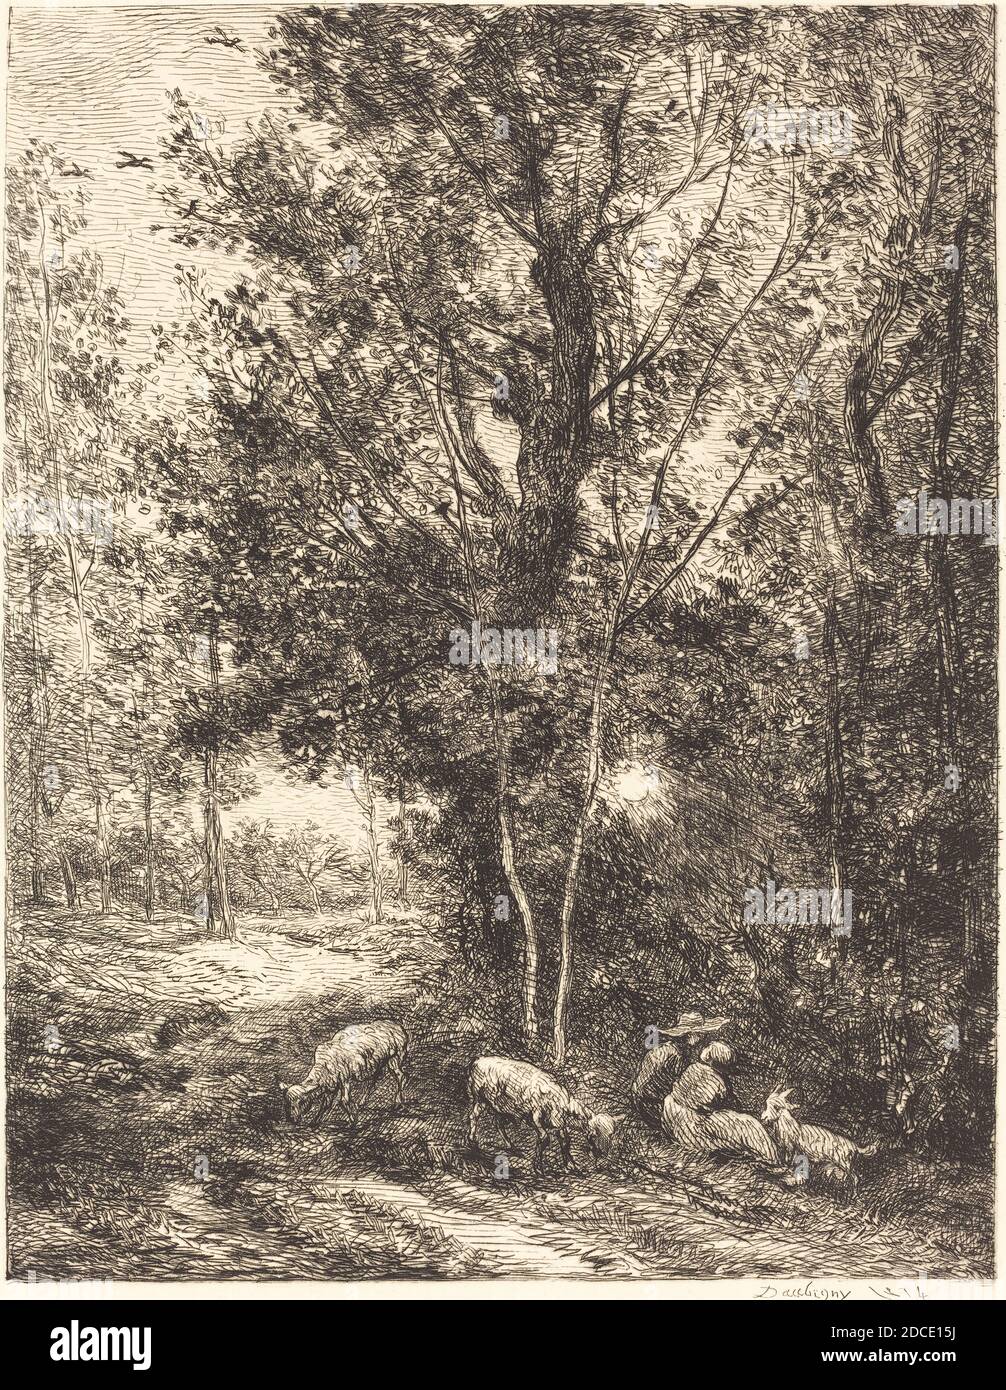 Charles-François Daubigny, (artist), French, 1817 - 1878, Shepherd and Shepherdess (Le Berger et la bergere), 1874, etching Stock Photo